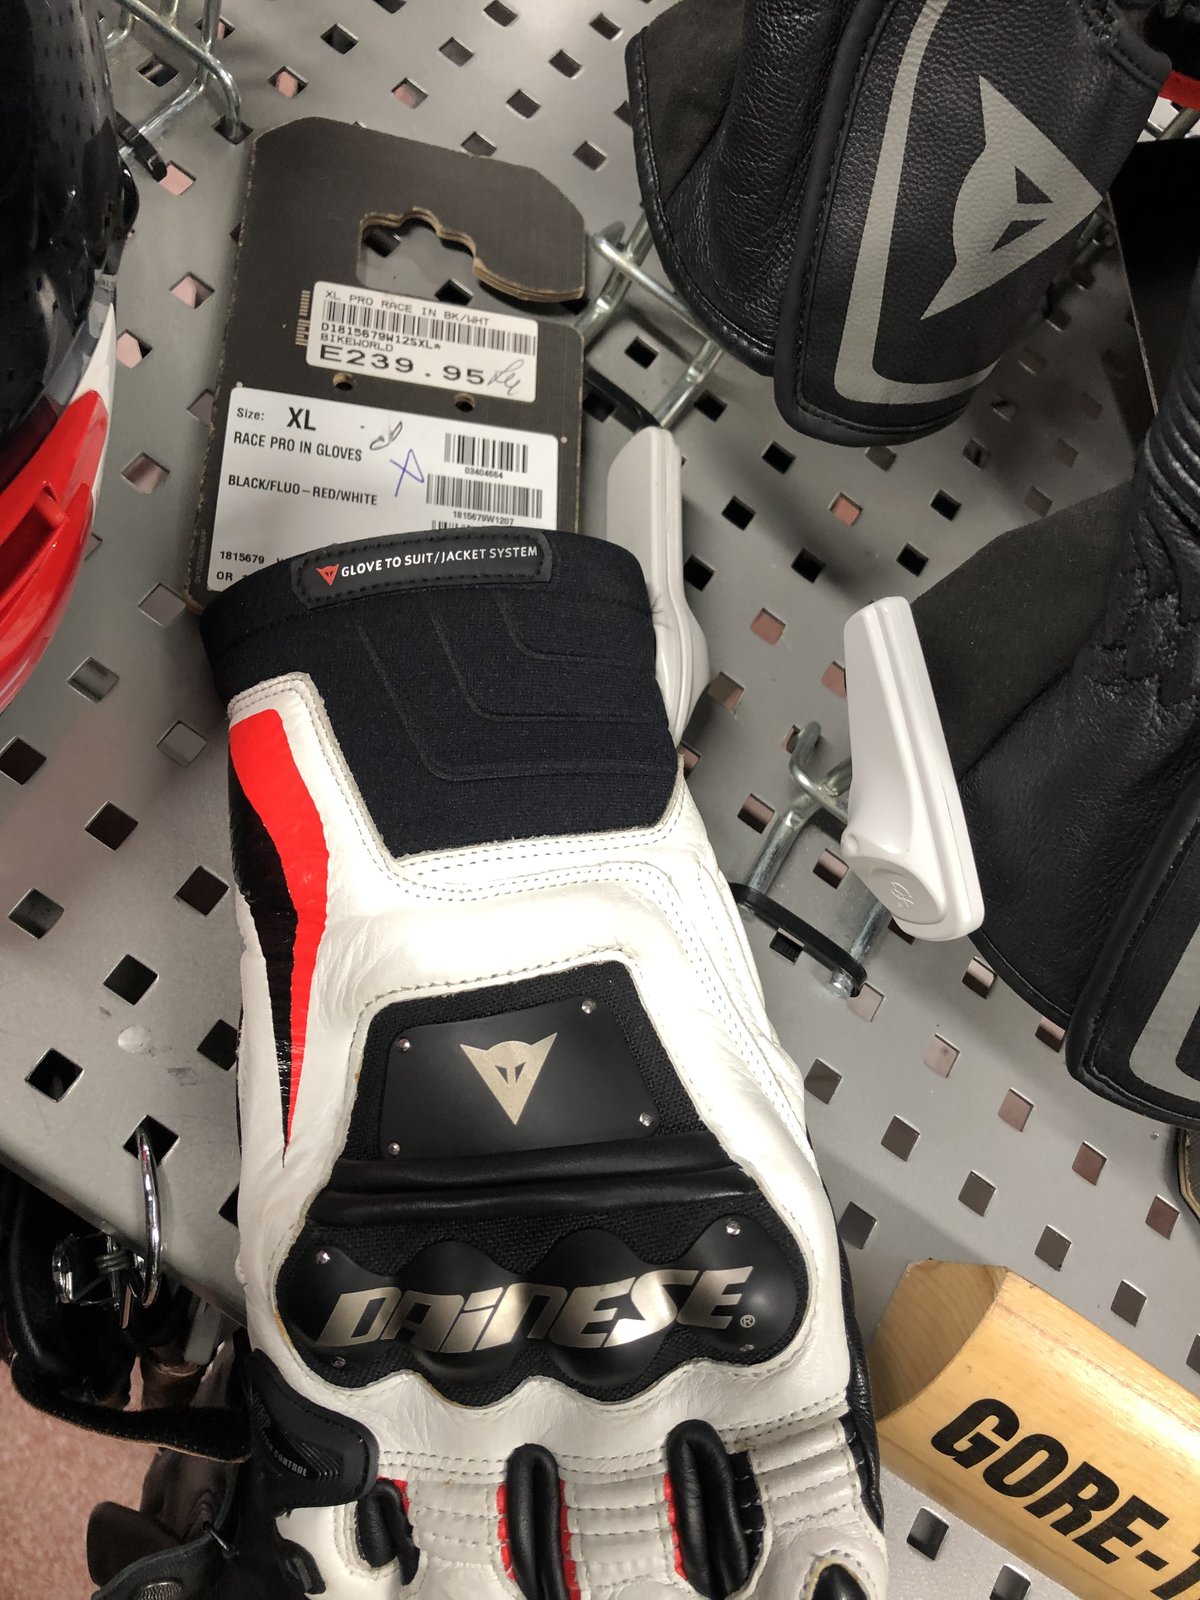 For Sale - Dainese Pro Race Gloves | Ducati Forum